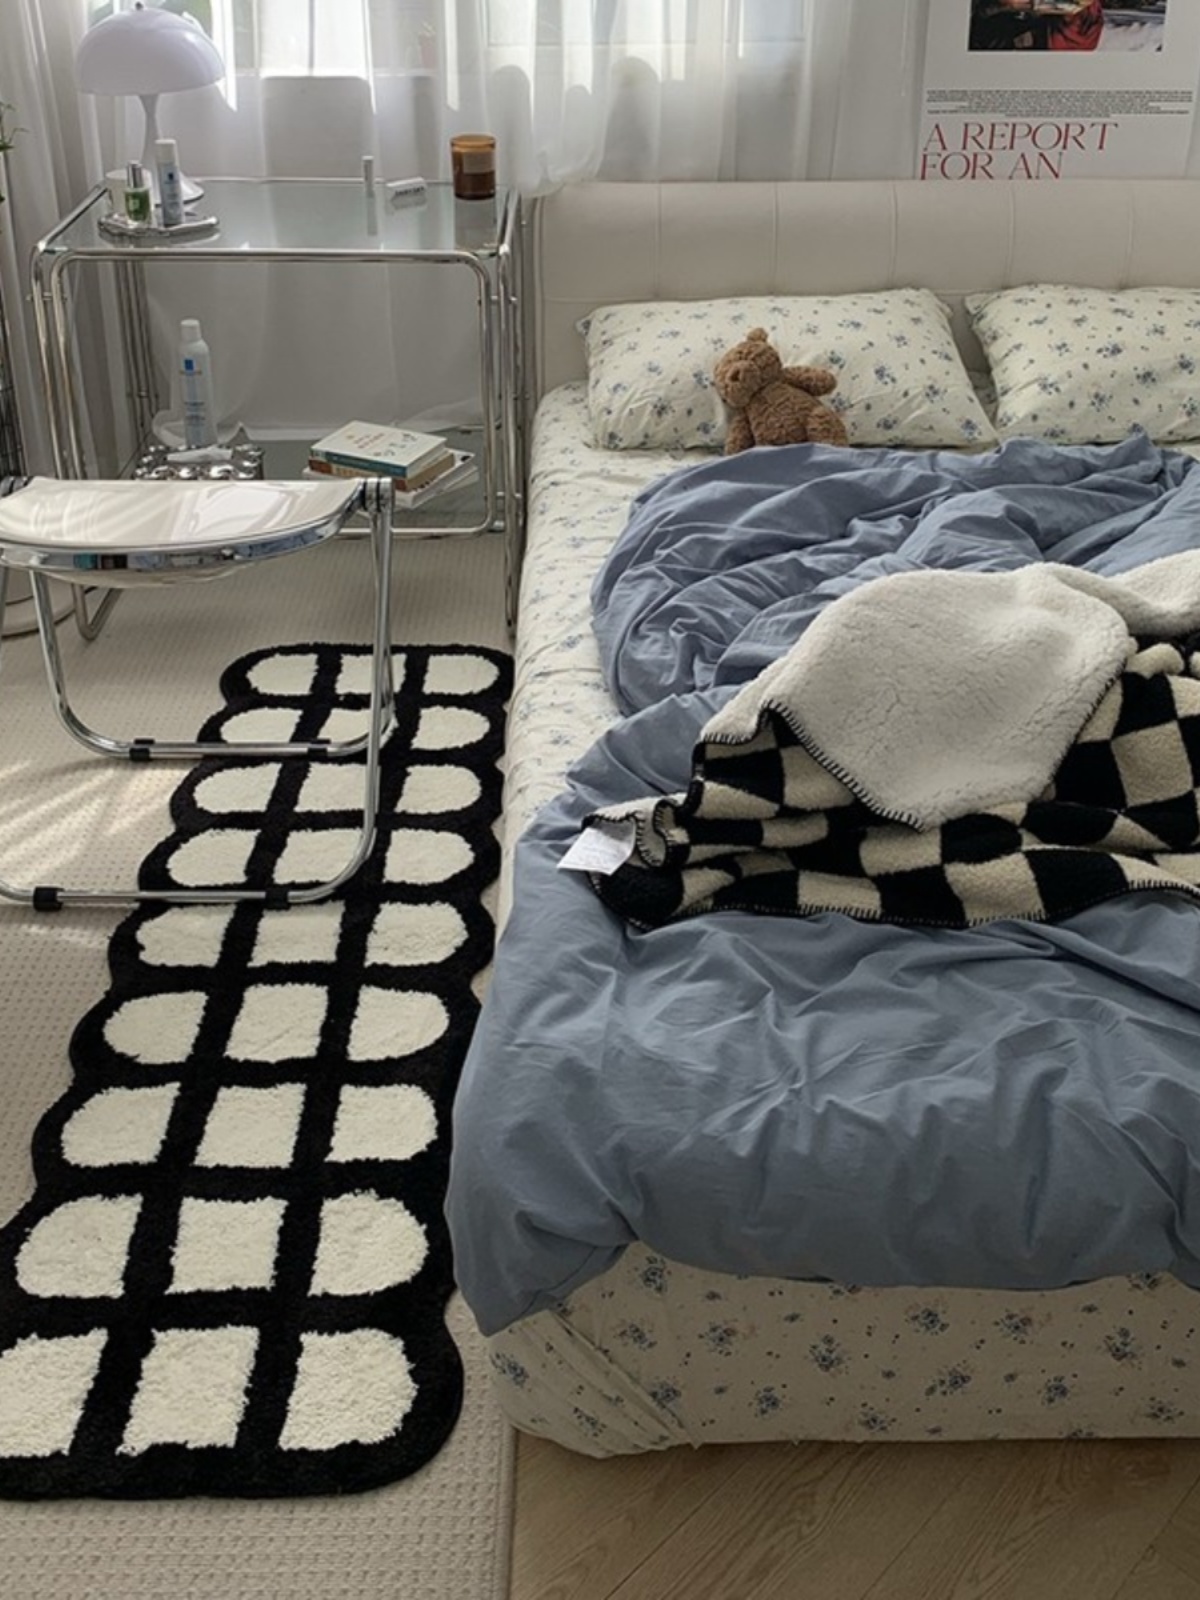 ins風少女房間黑白格子地墊耐髒小腳墊簡約現代風格臥室床前毯棋盤格床邊地毯